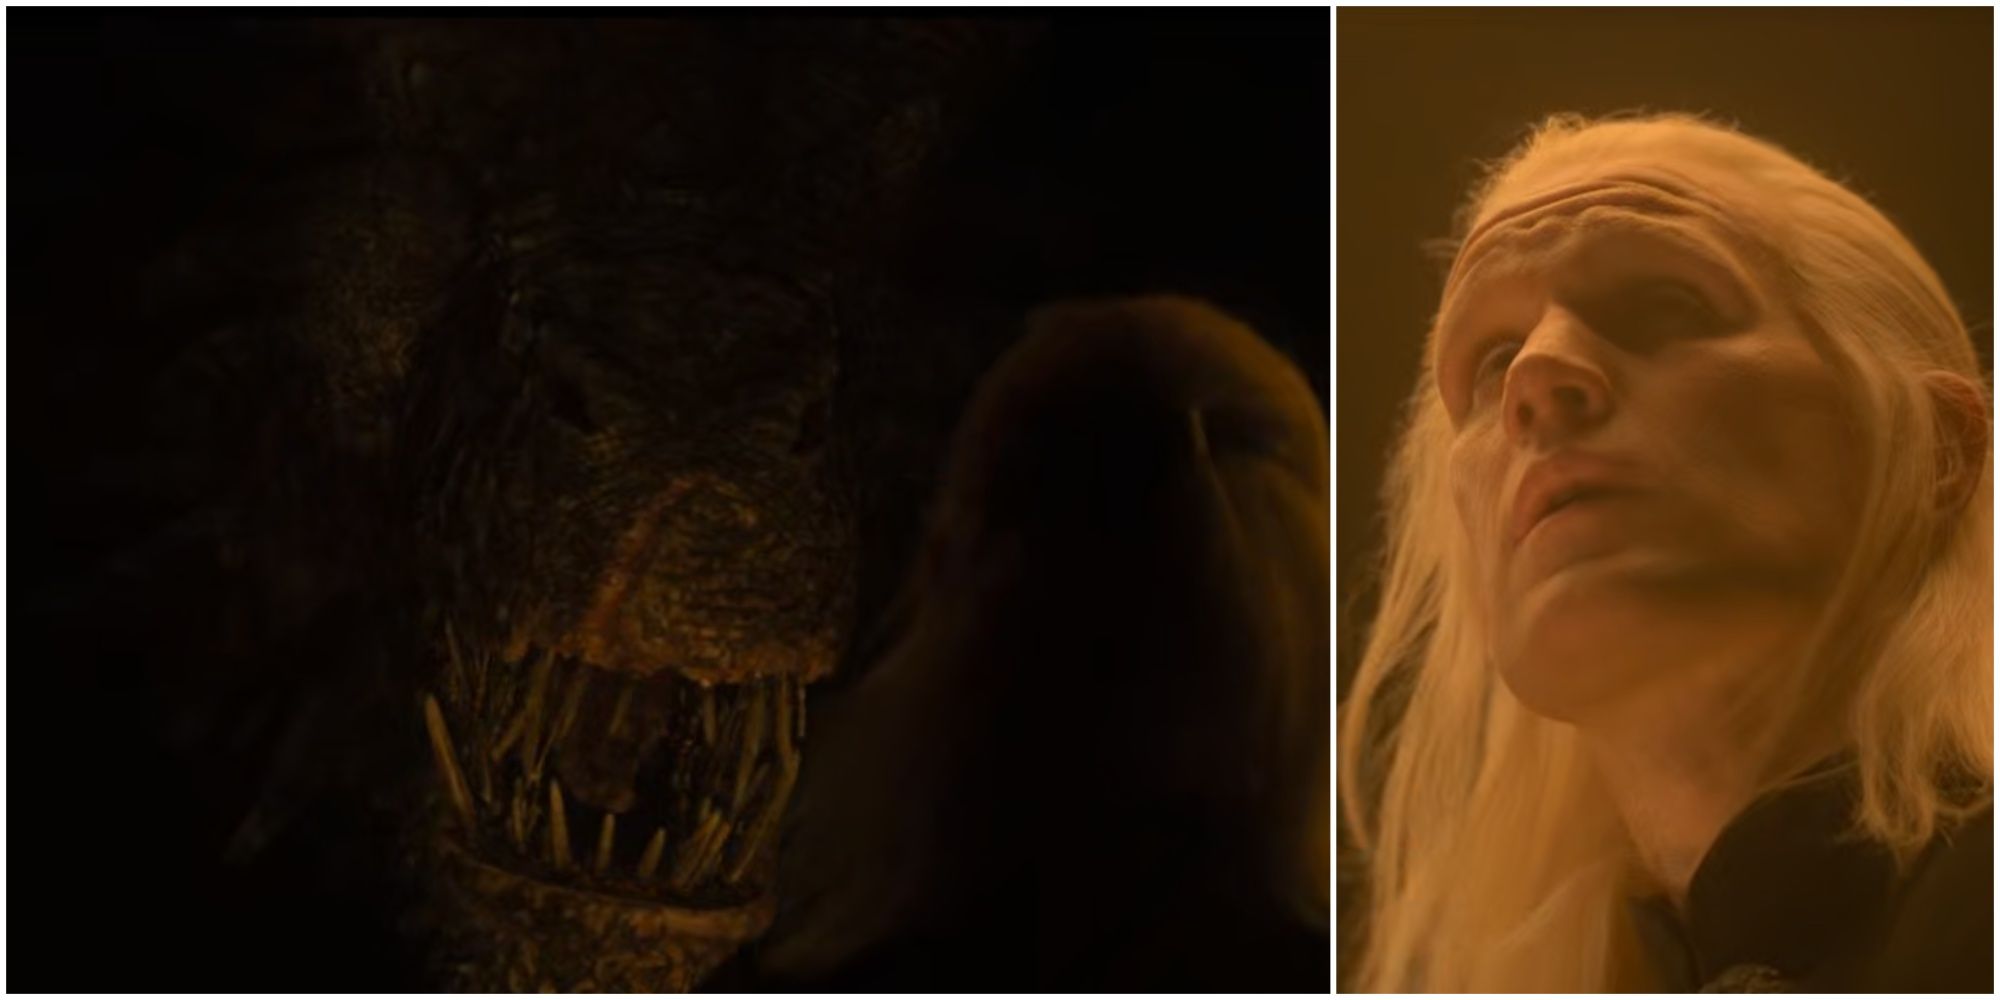 Split image of Vermithor and Daemon Targaryen in House of the Dragon.